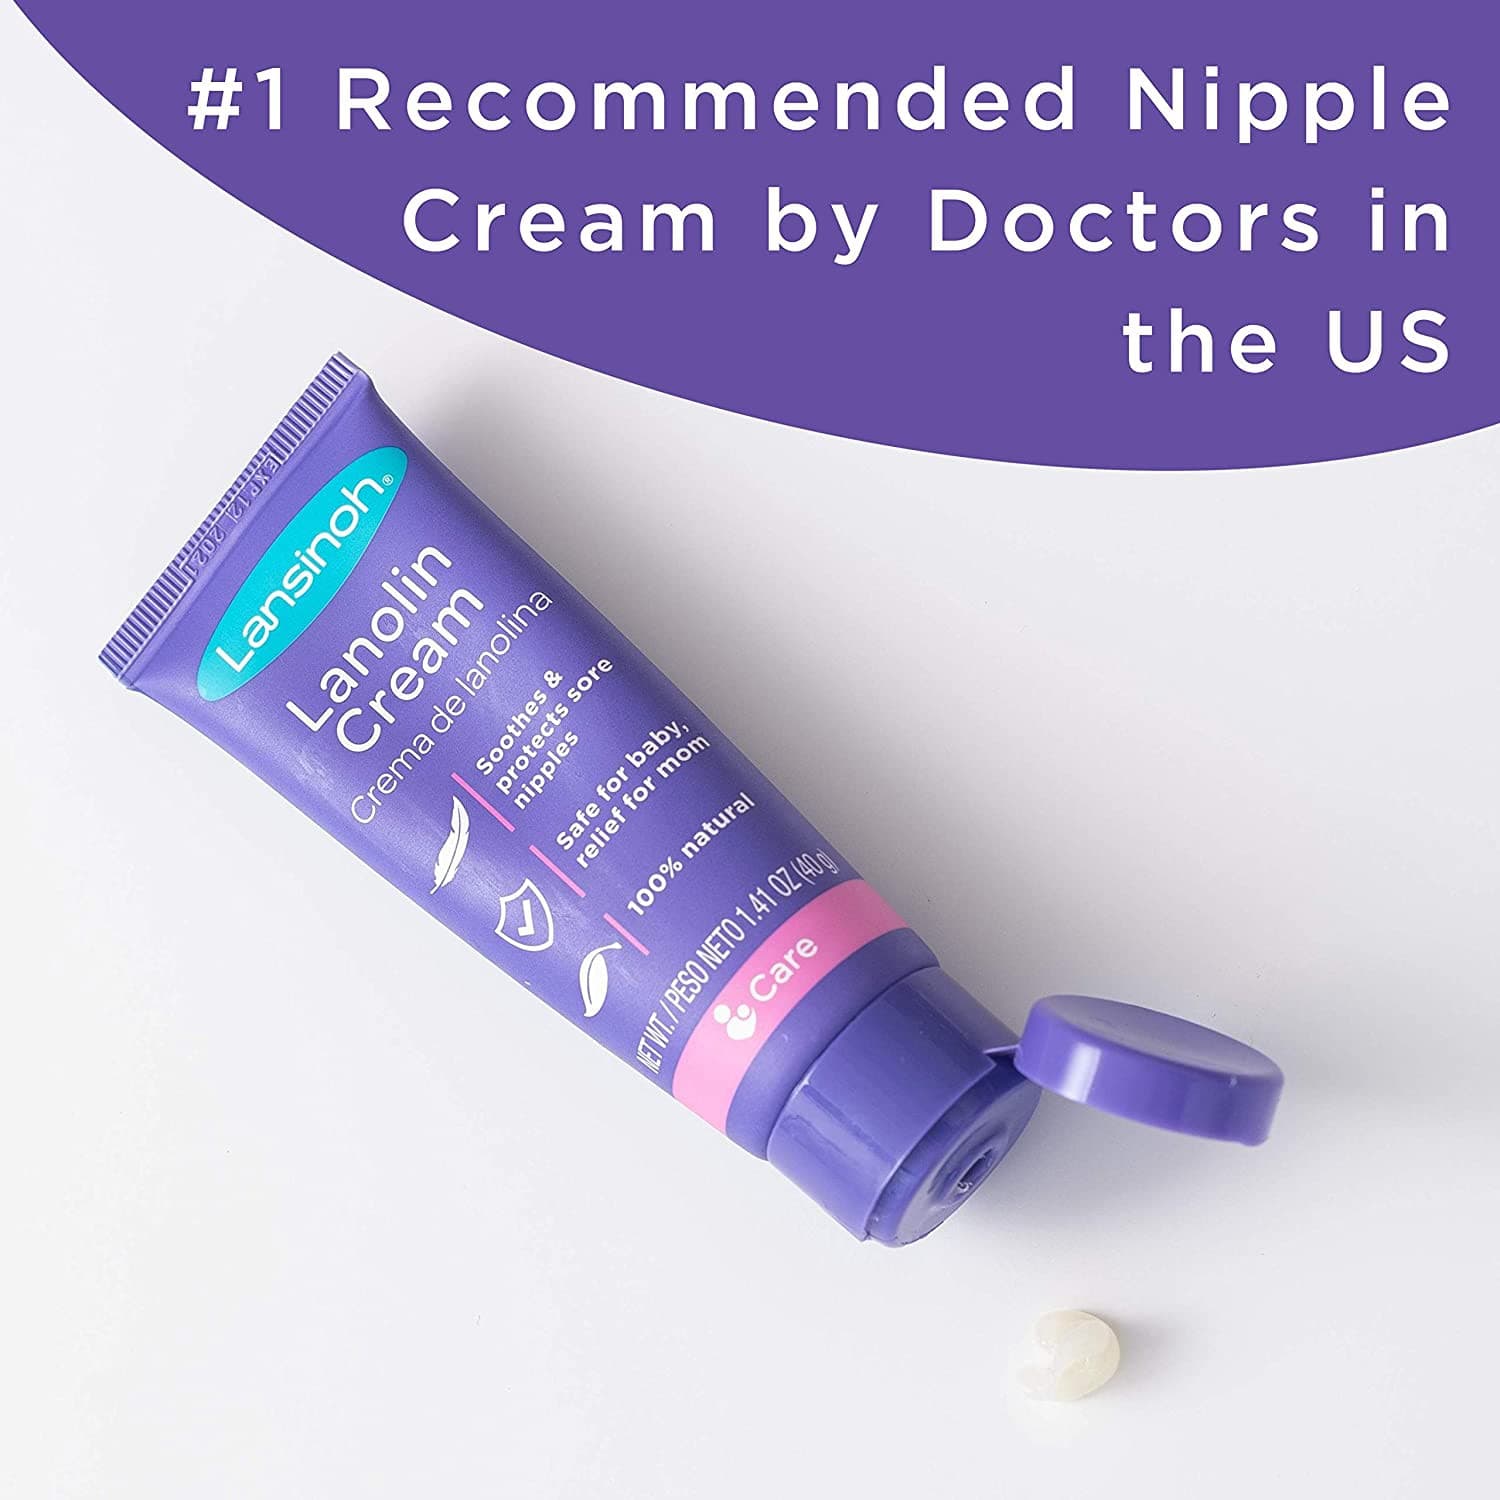 Lansinoh Lanolin Nipple Cream for Breastfeeding, 1.41 Ounce.